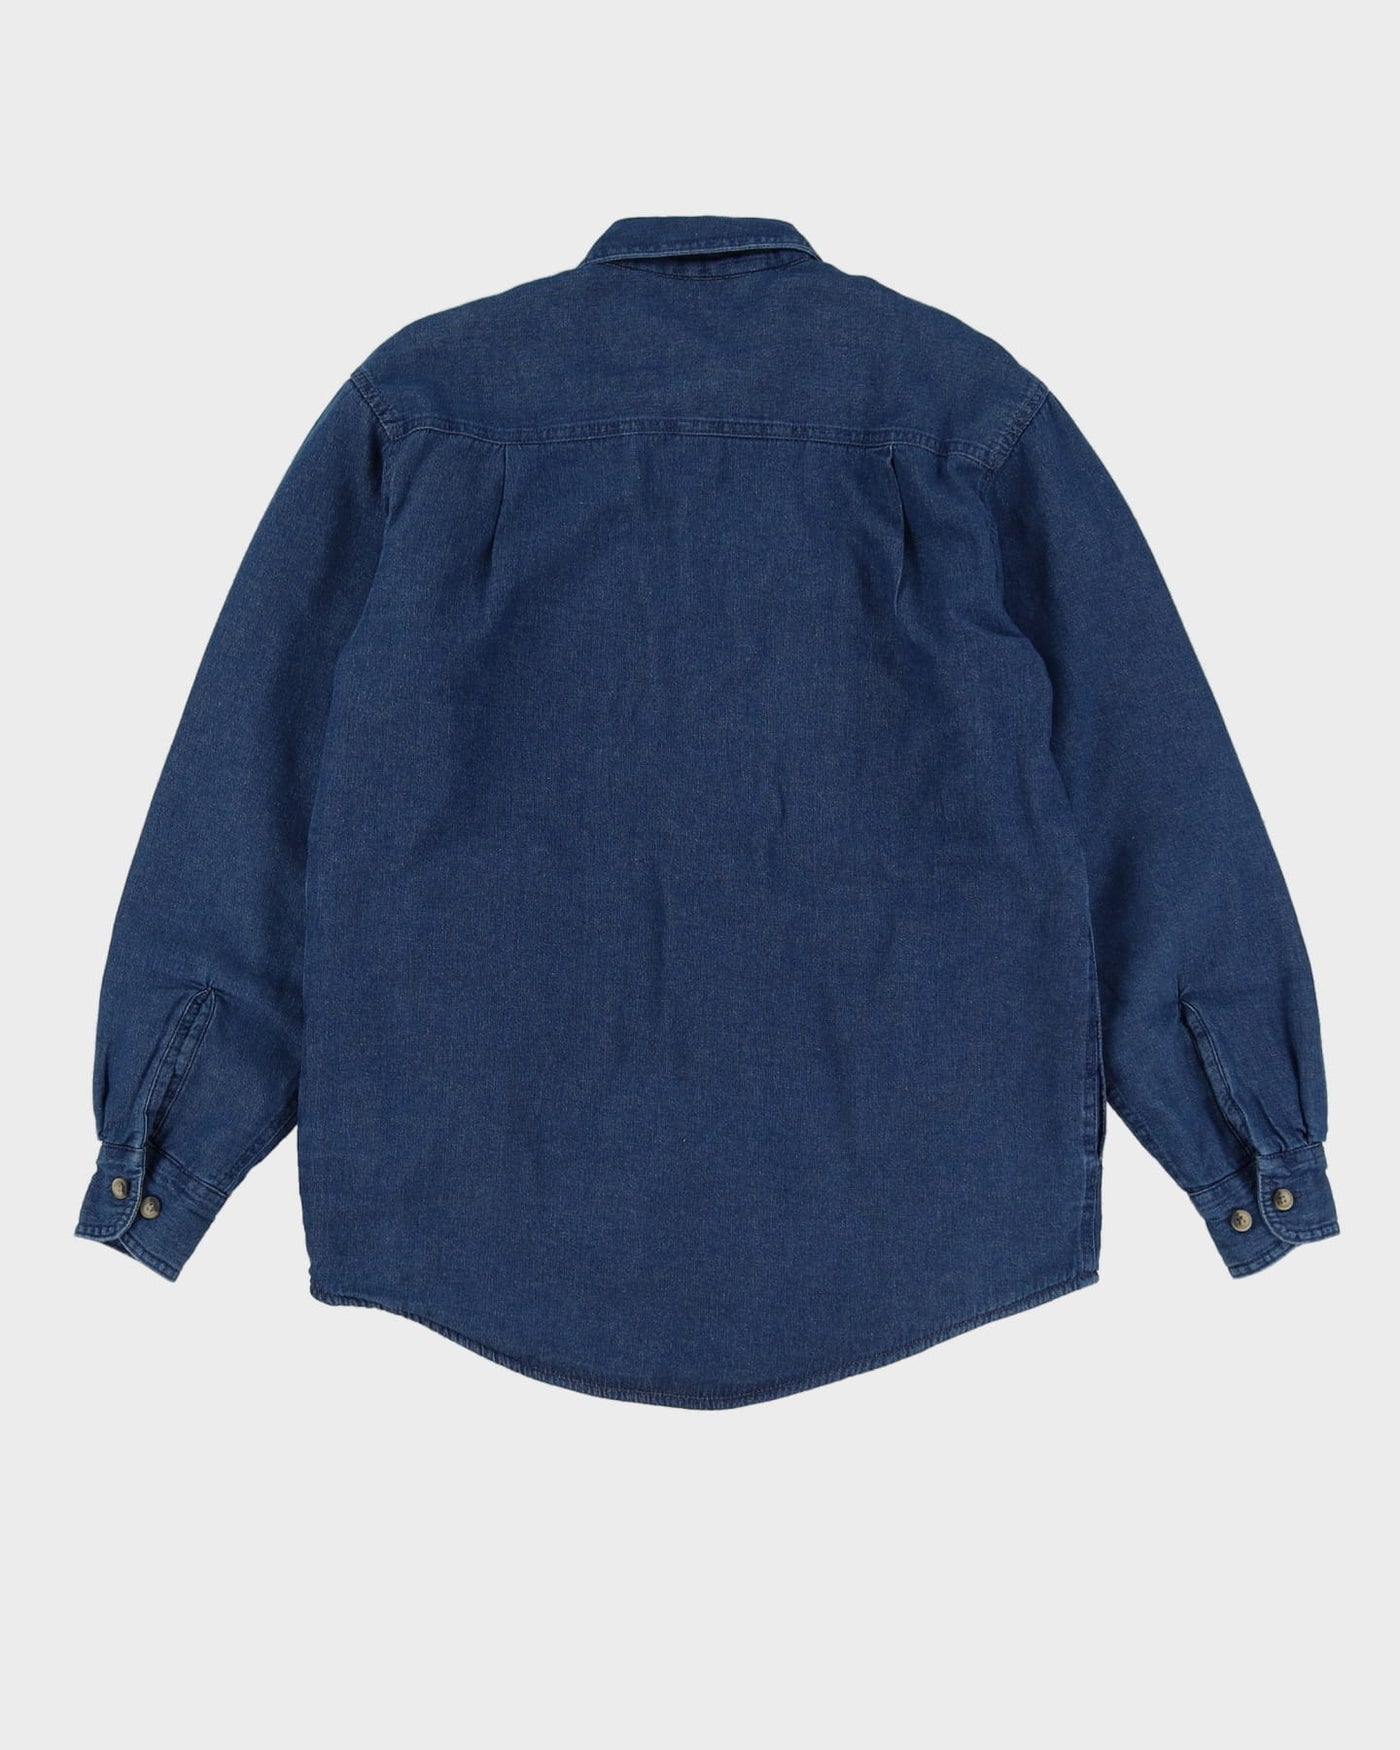 Wrangler Blue Denim Fleece Lined Shirt - M